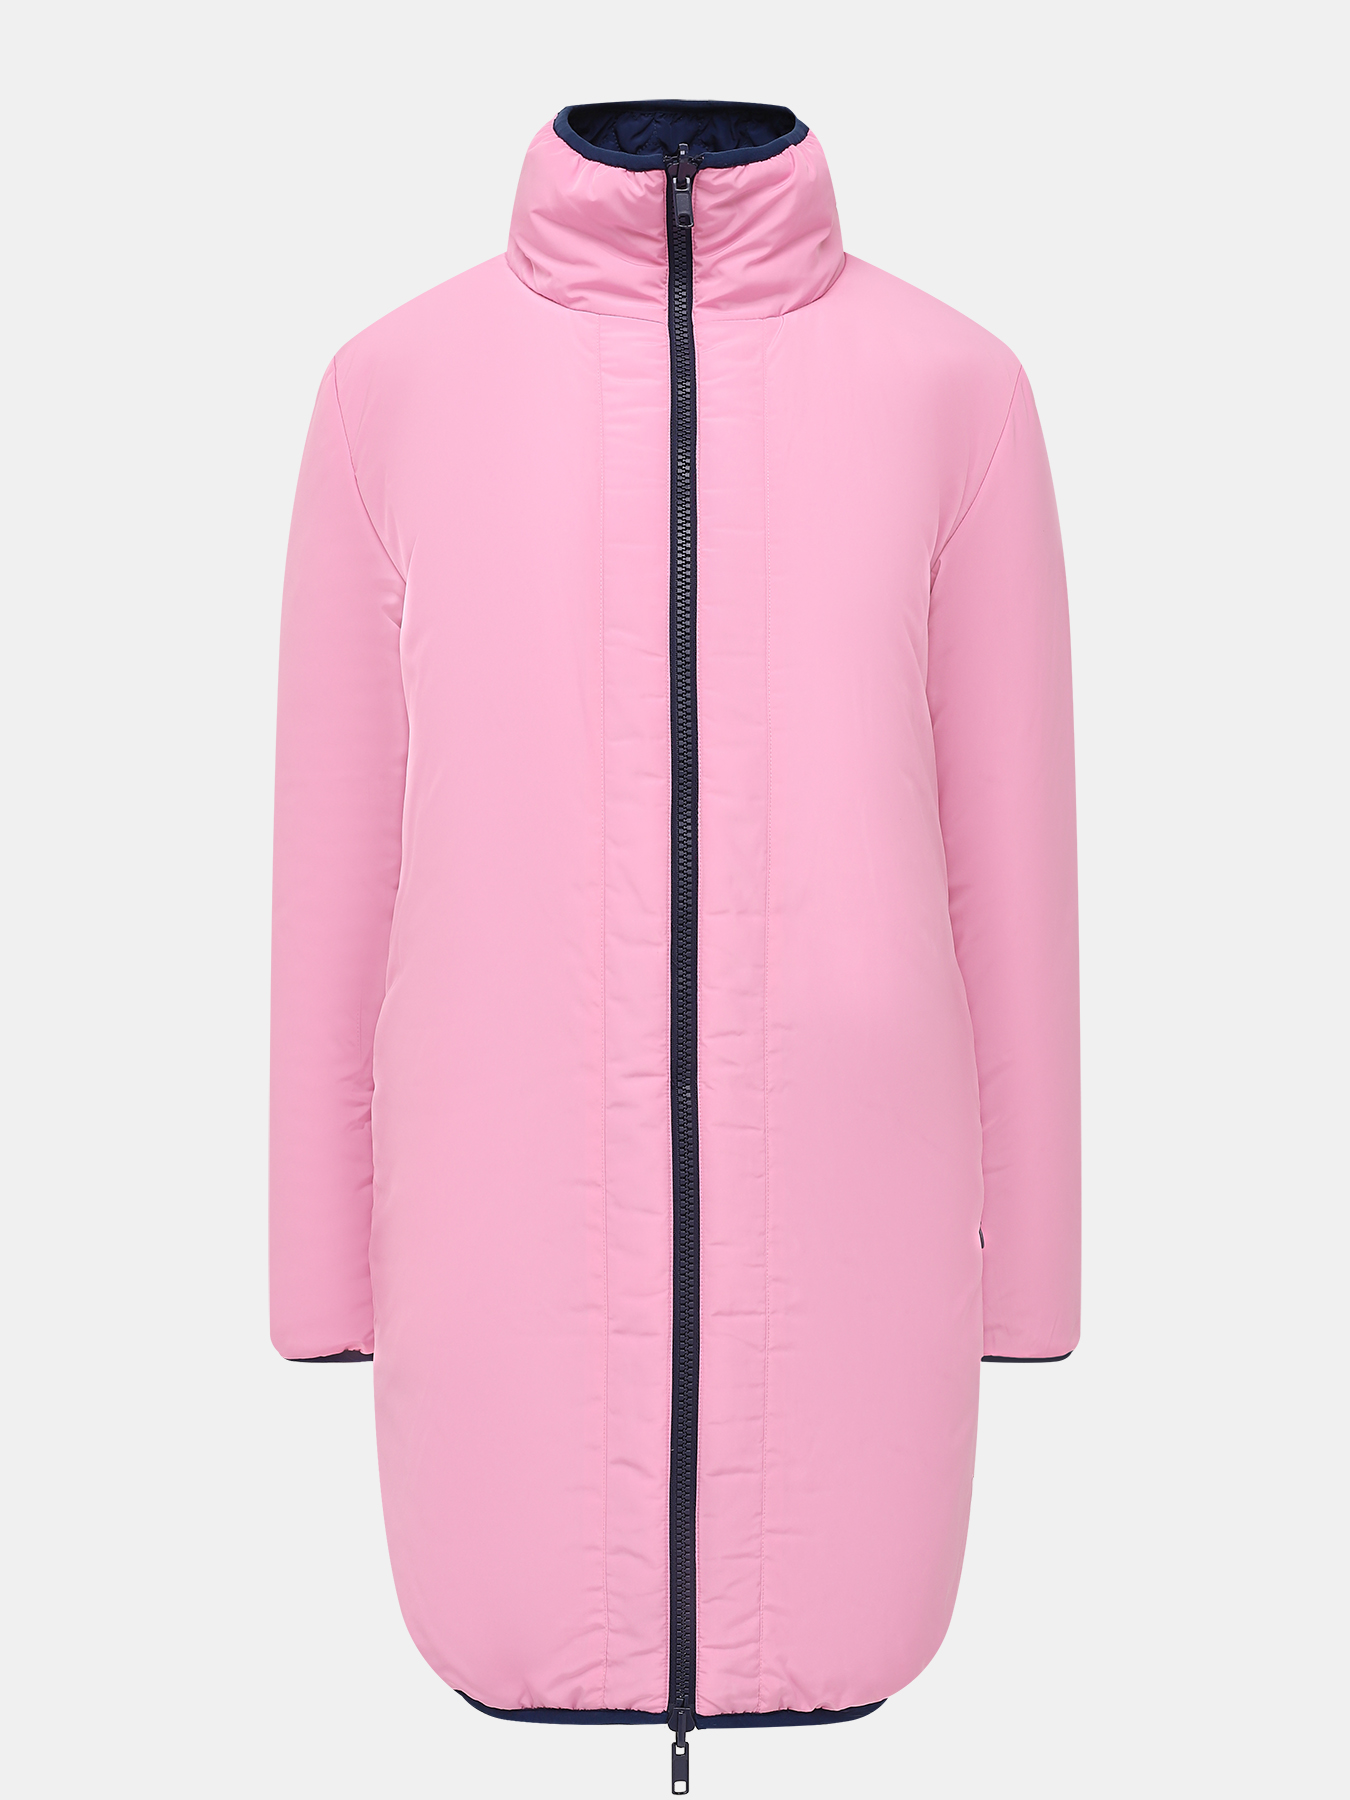 Двустороняя куртка Love Moschino 394606-020, цвет розовый, размер 40